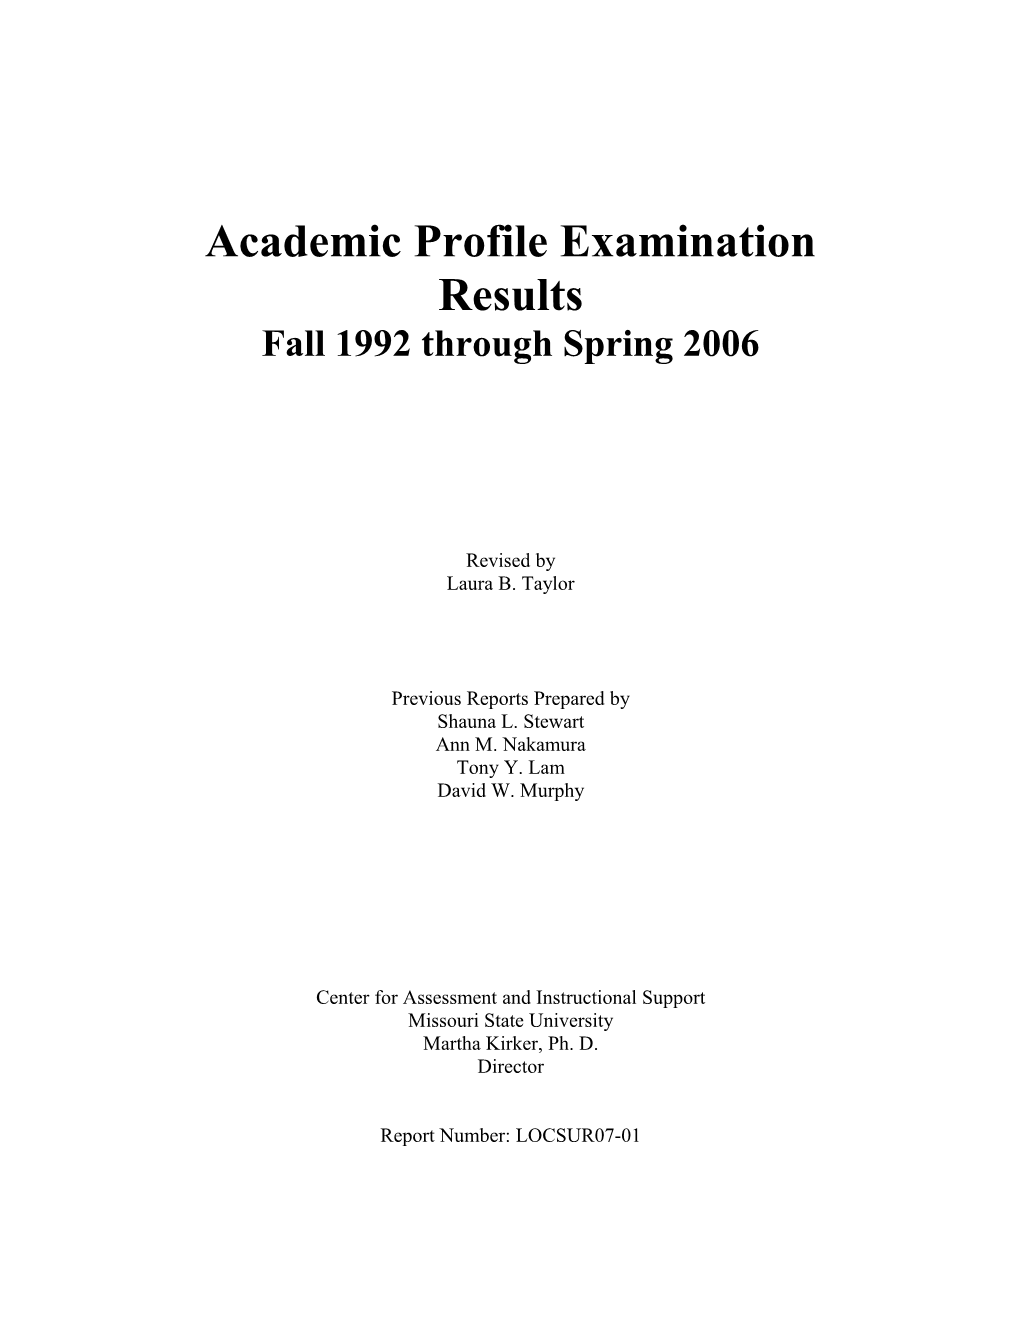 Academic Profile Examination Results